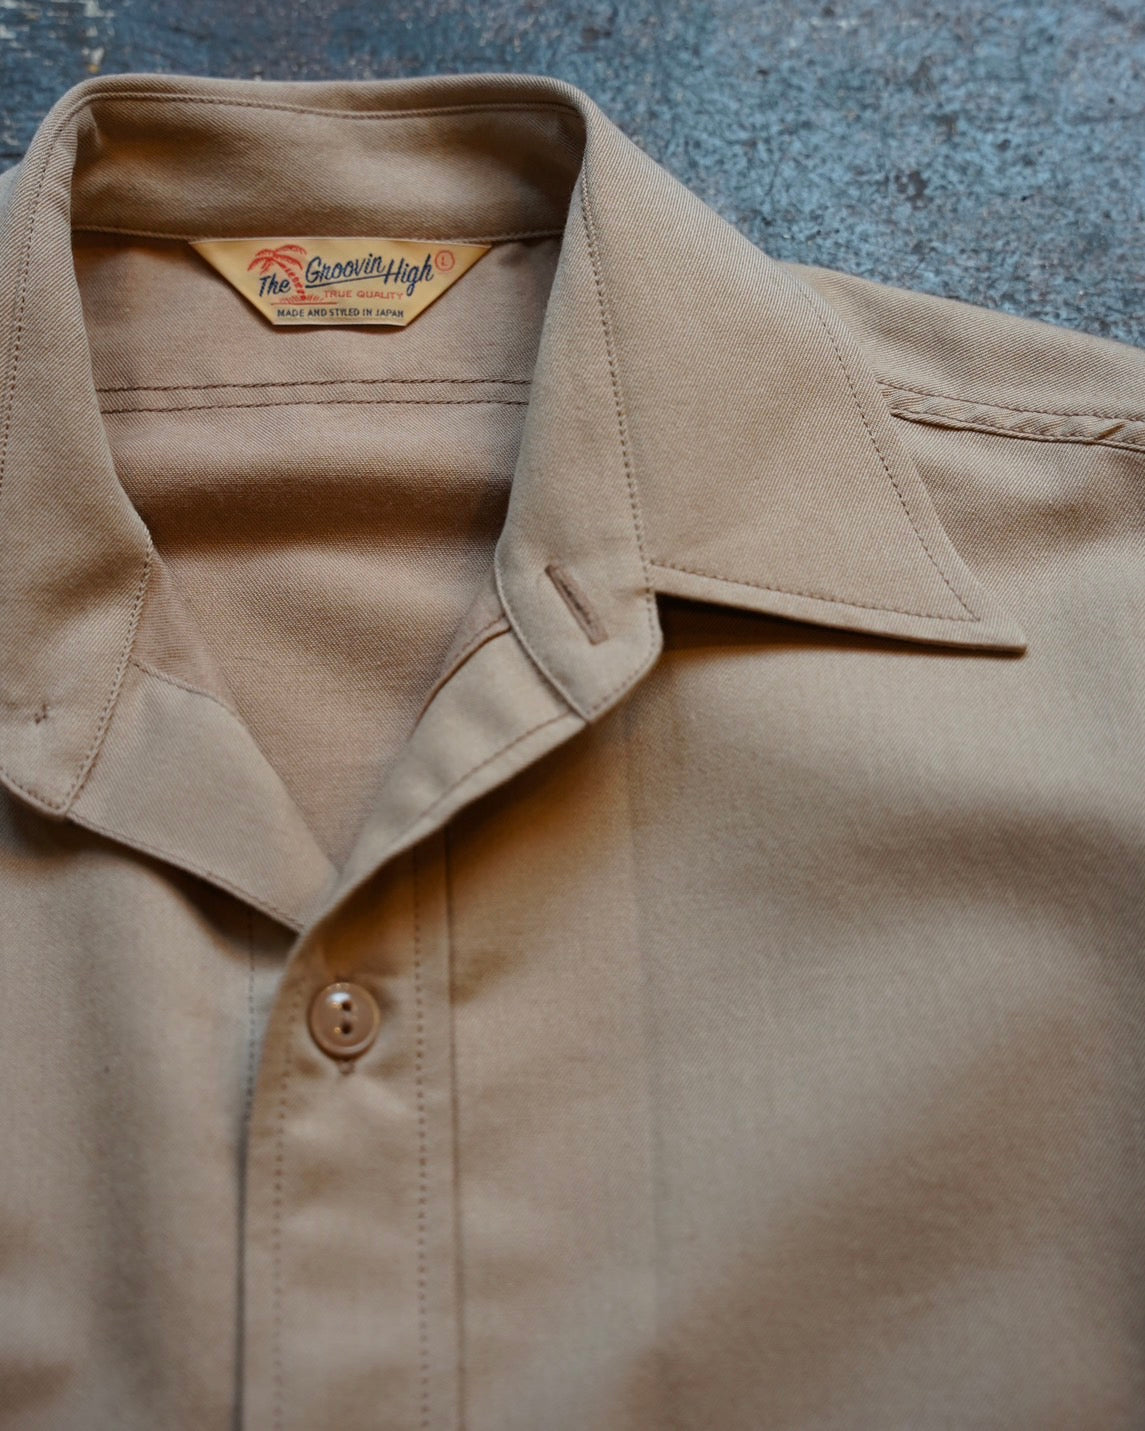 #395 1940s Work Shirt